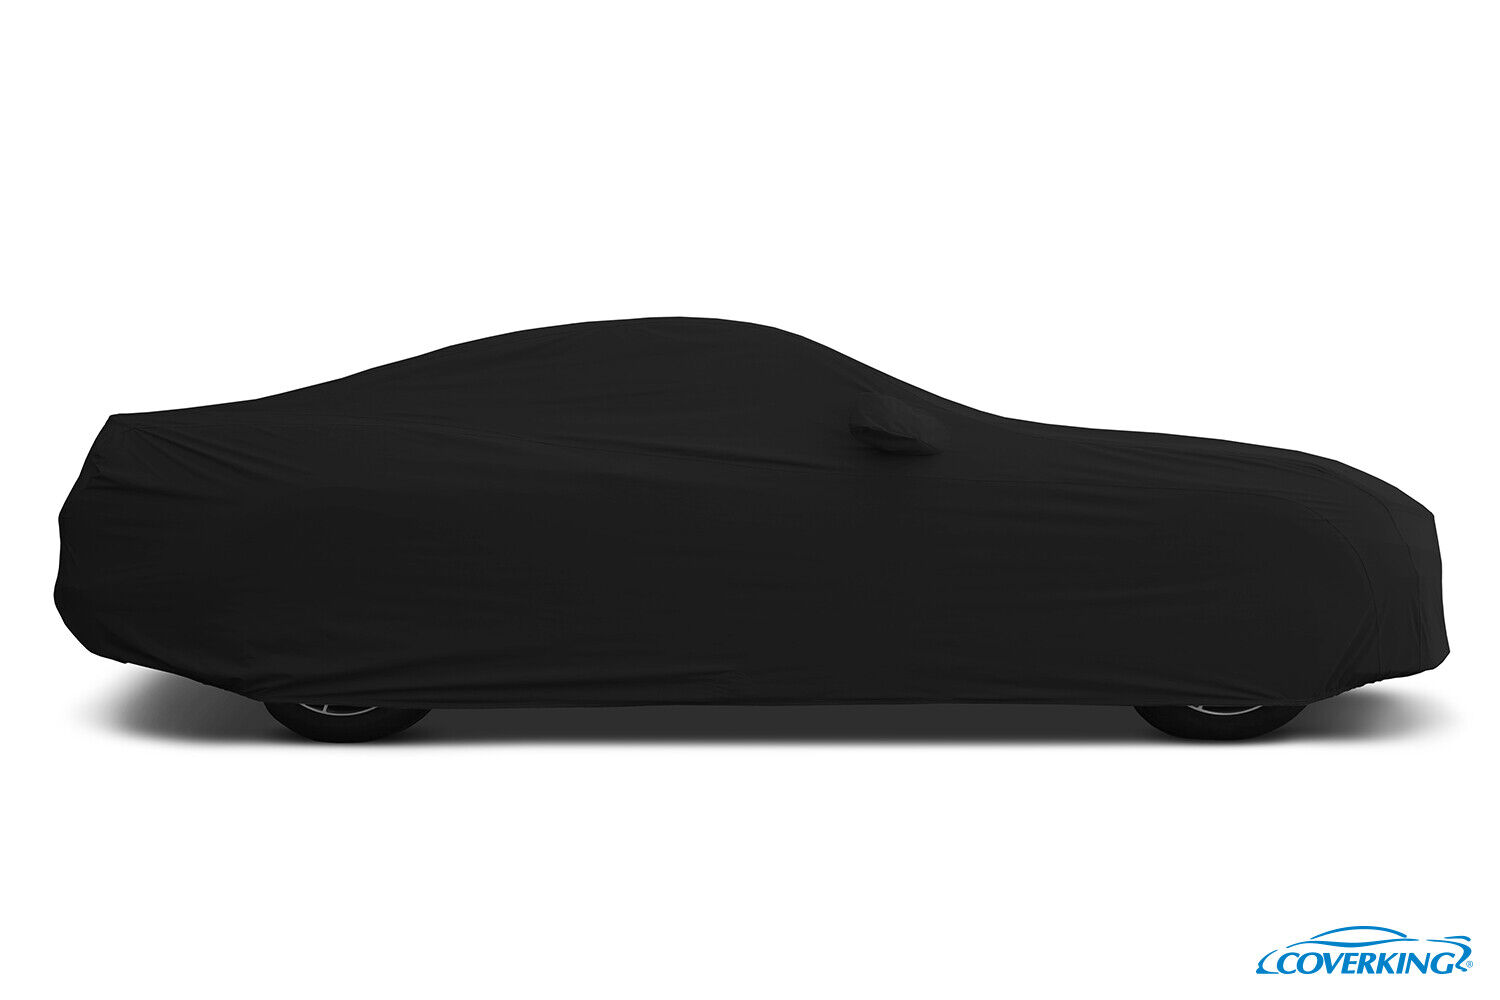 Coverking Stormproof Outdoor Car Cover for Ferrari Testarossa - Made to Order